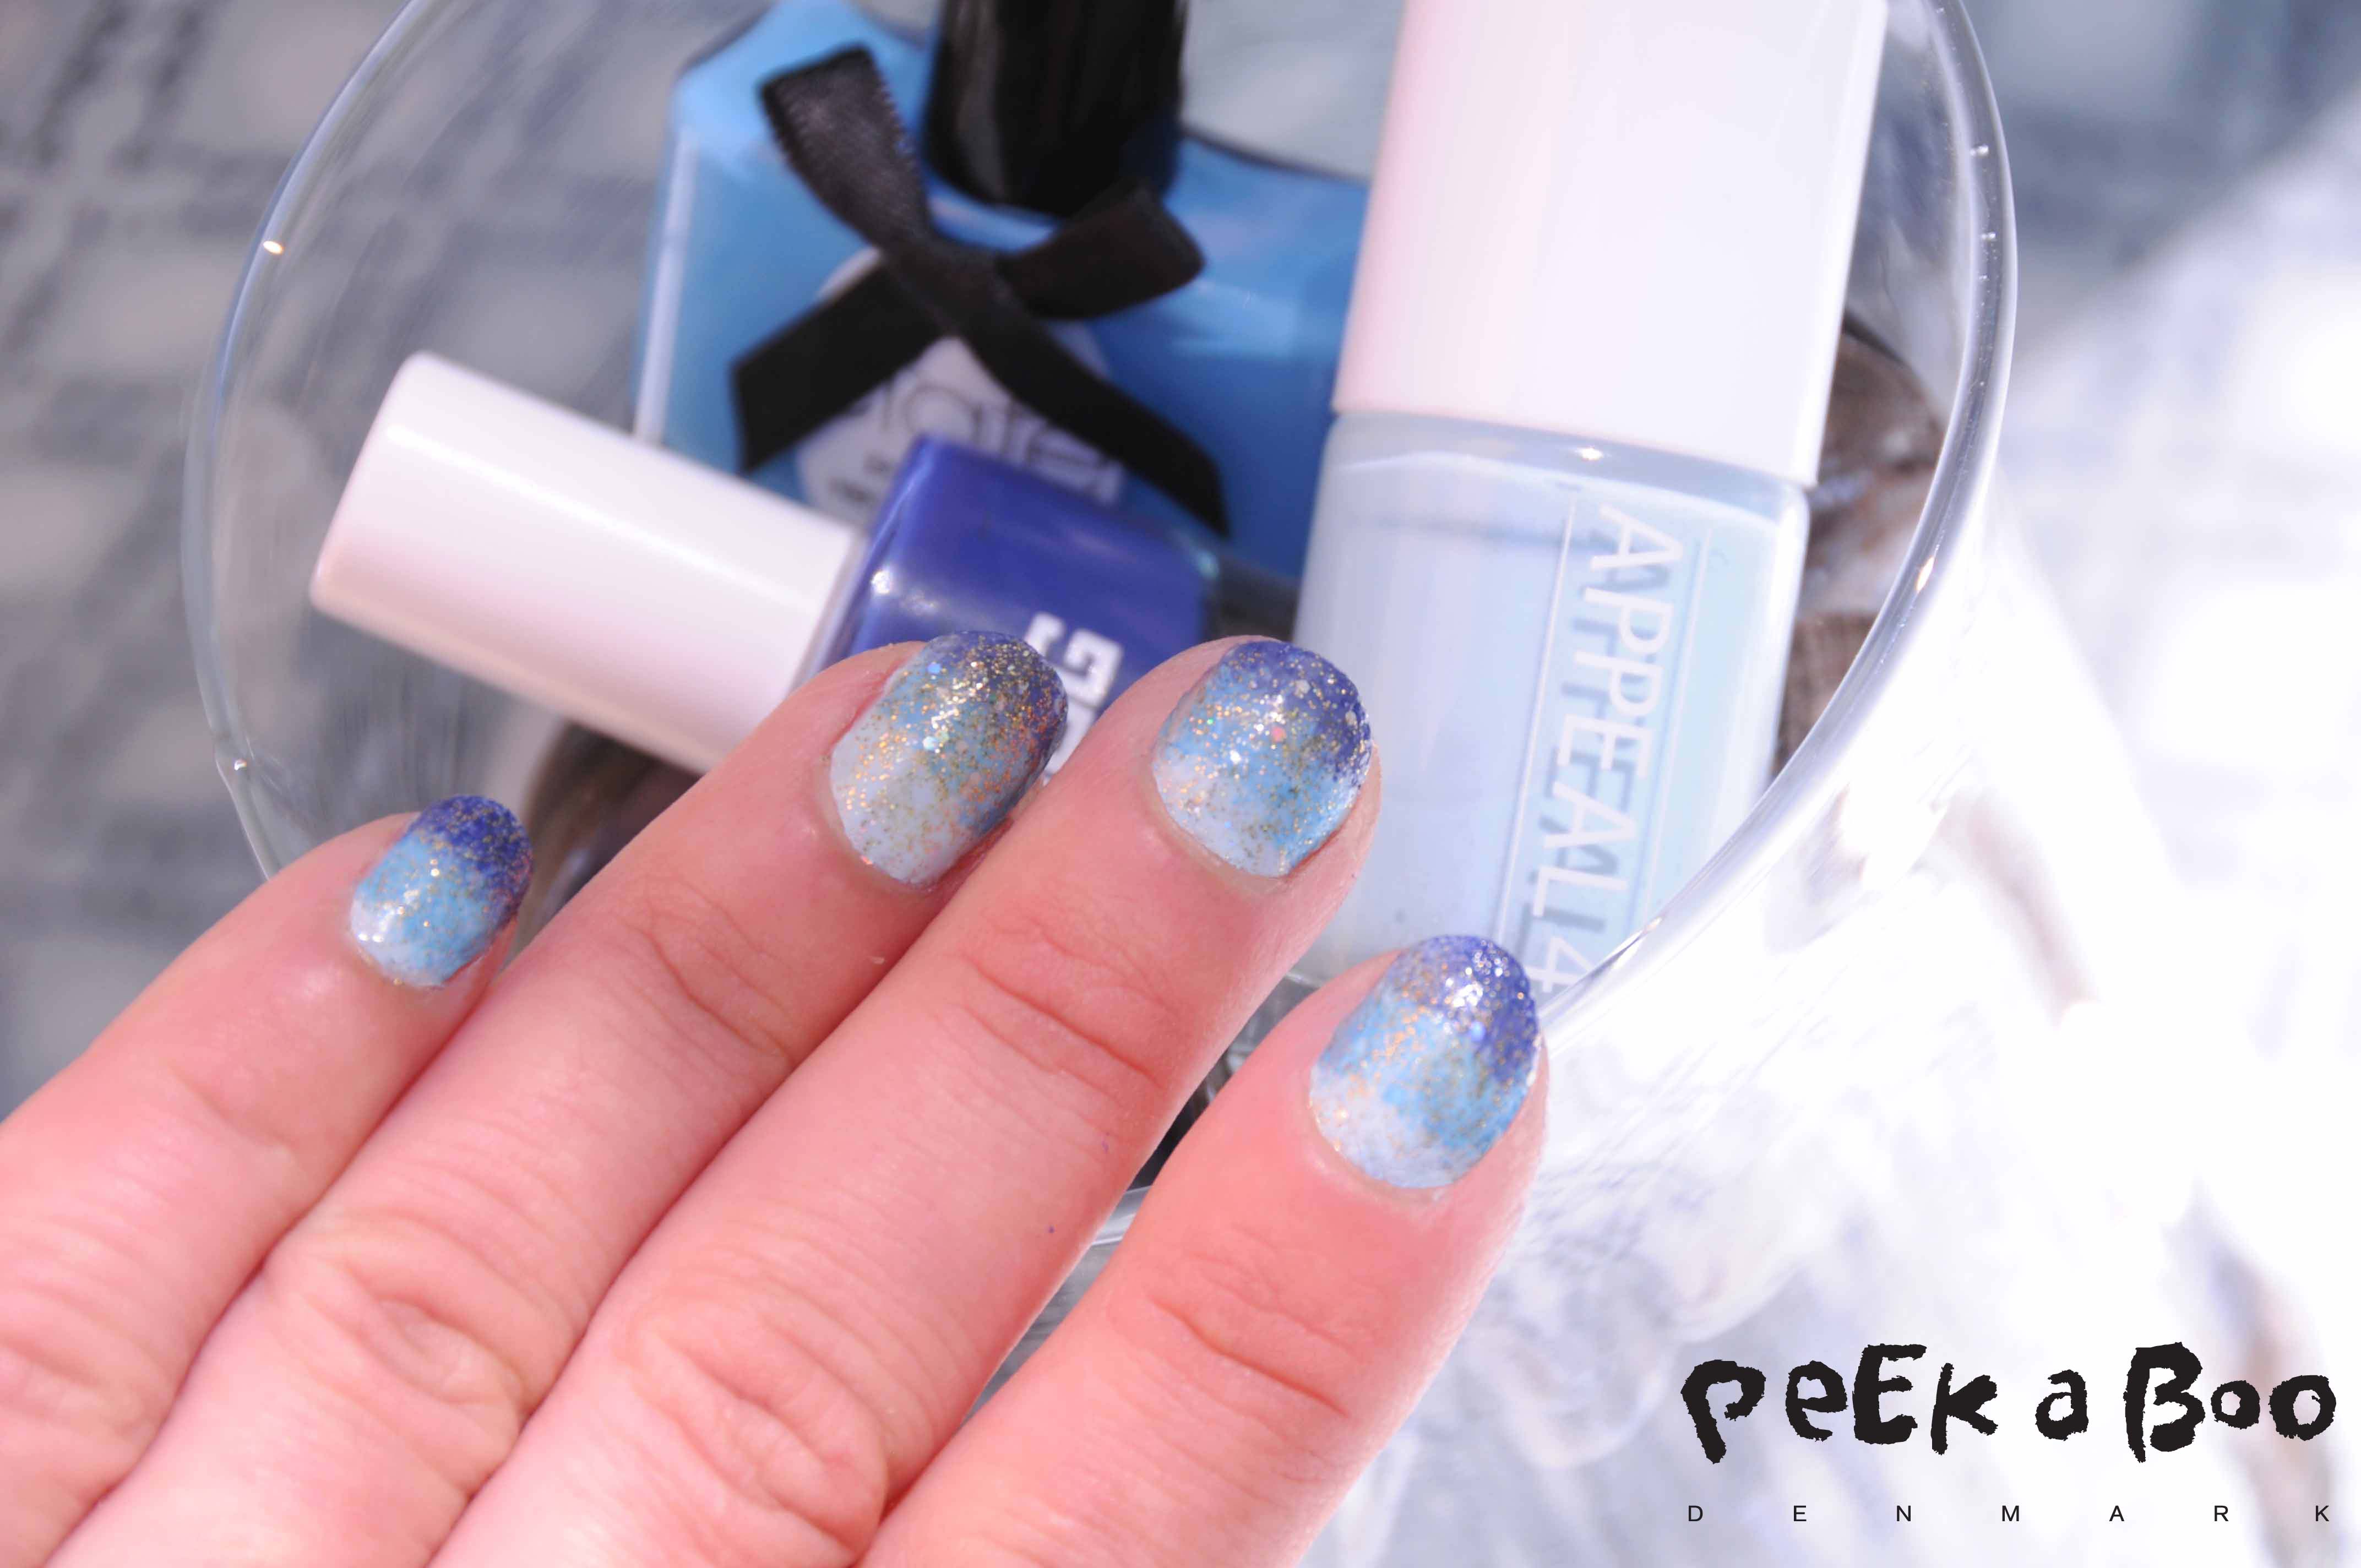 Nail art, sparkling horisont...in blue by Peekaboo design.